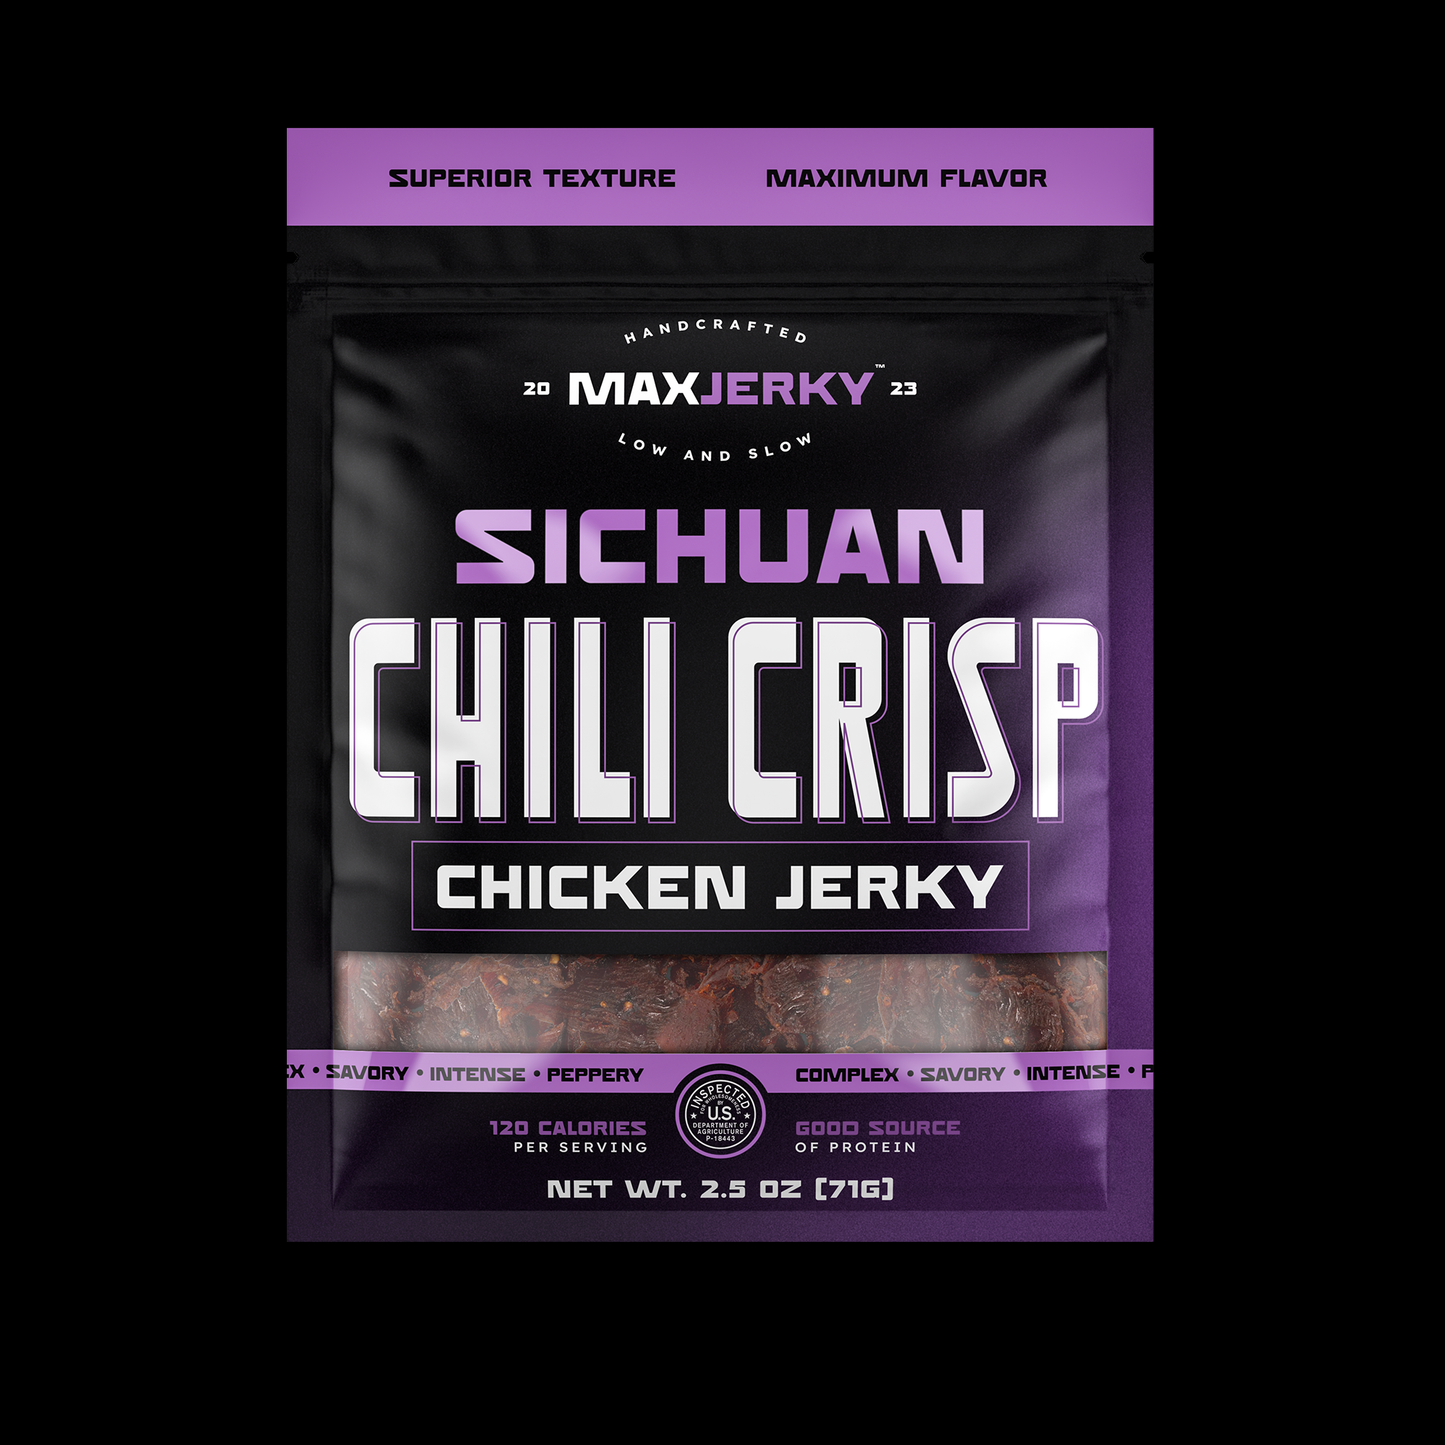 Sichuan Chili Crisp Chicken Jerky